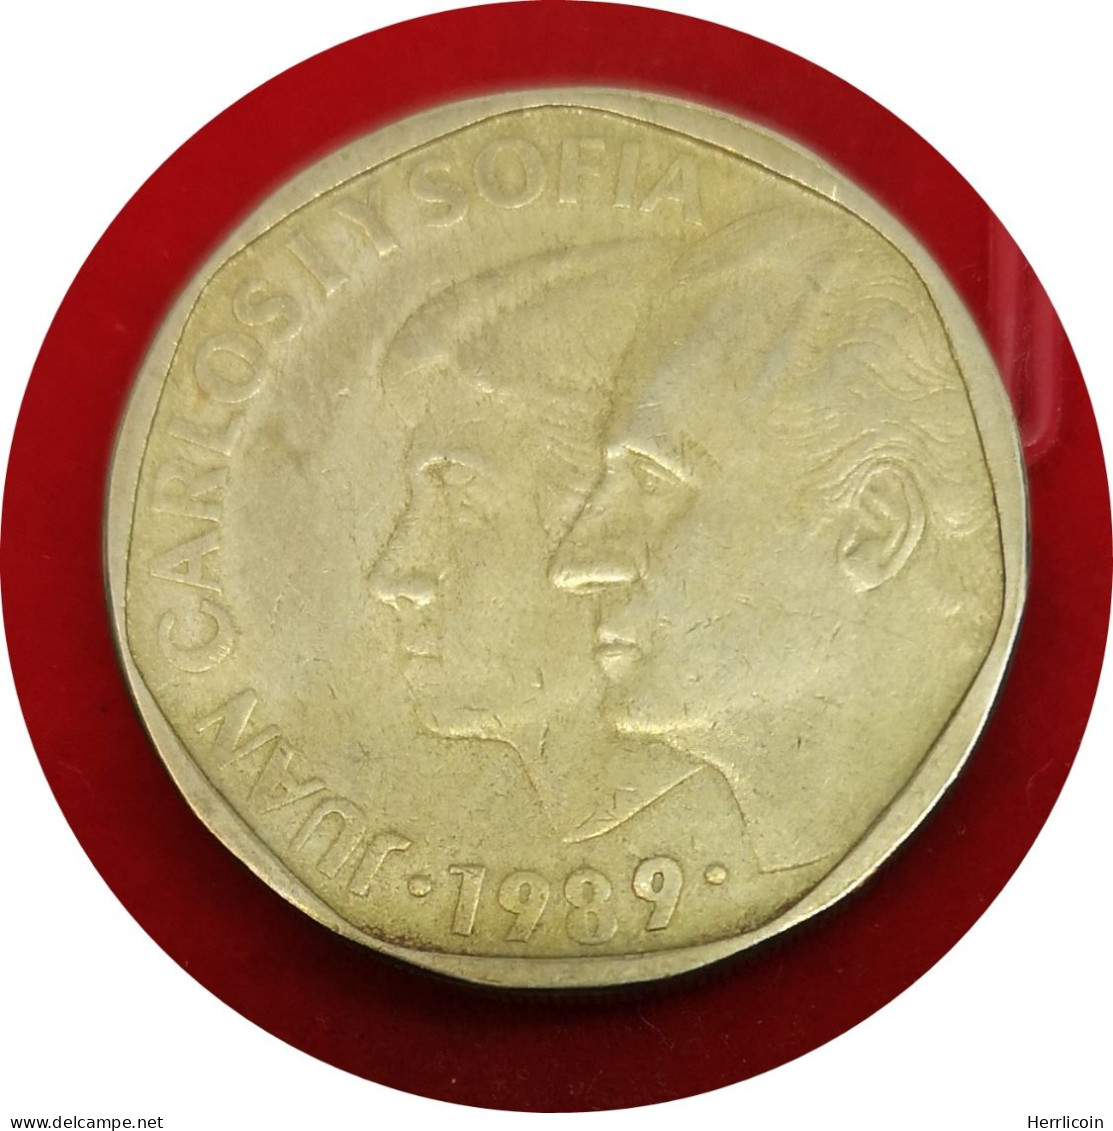 Monnaie Espagne - 1989 - 500 Pesetas Juan Carlos I - 500 Pesetas